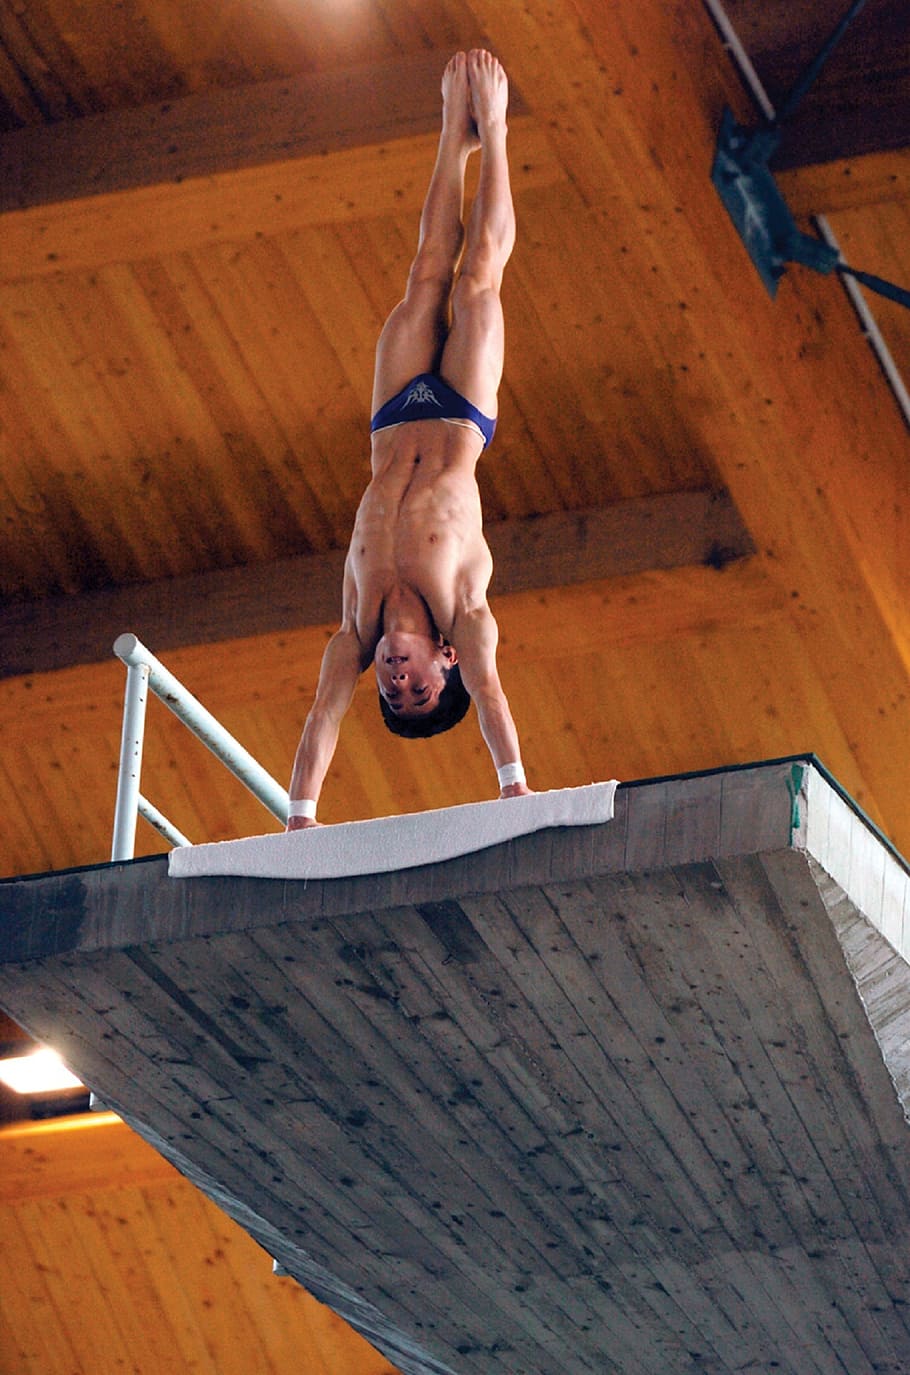 diver, handstand, platform, competitive, male, high, athlete, competition, acrobatic, precision